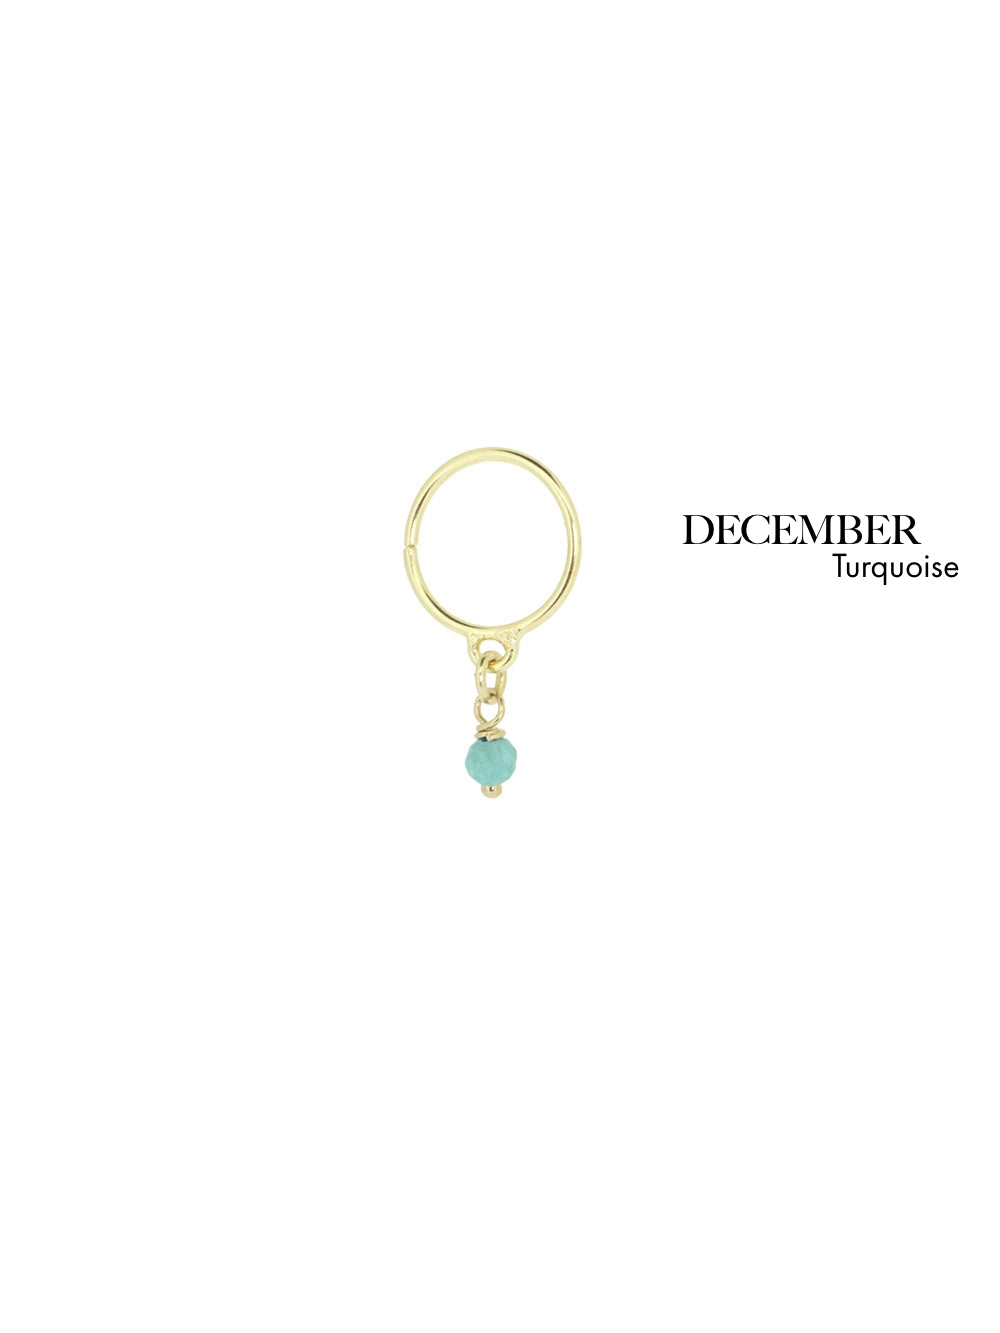 Bestie Birthstone December - Turquoise | 14K Gold Plated